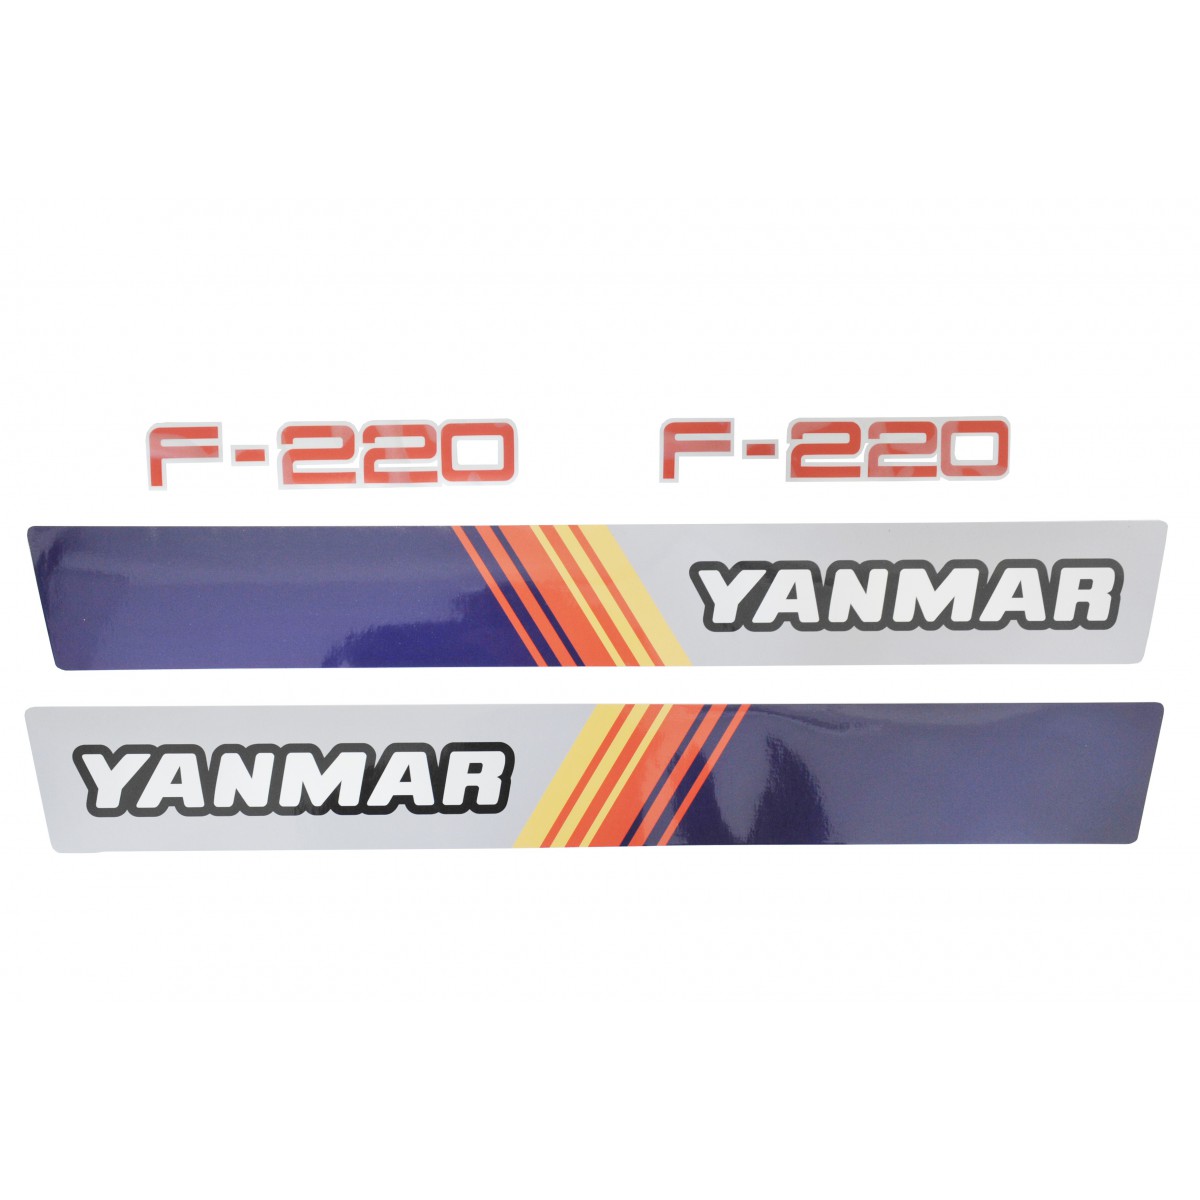 Naklejki Yanmar F-220